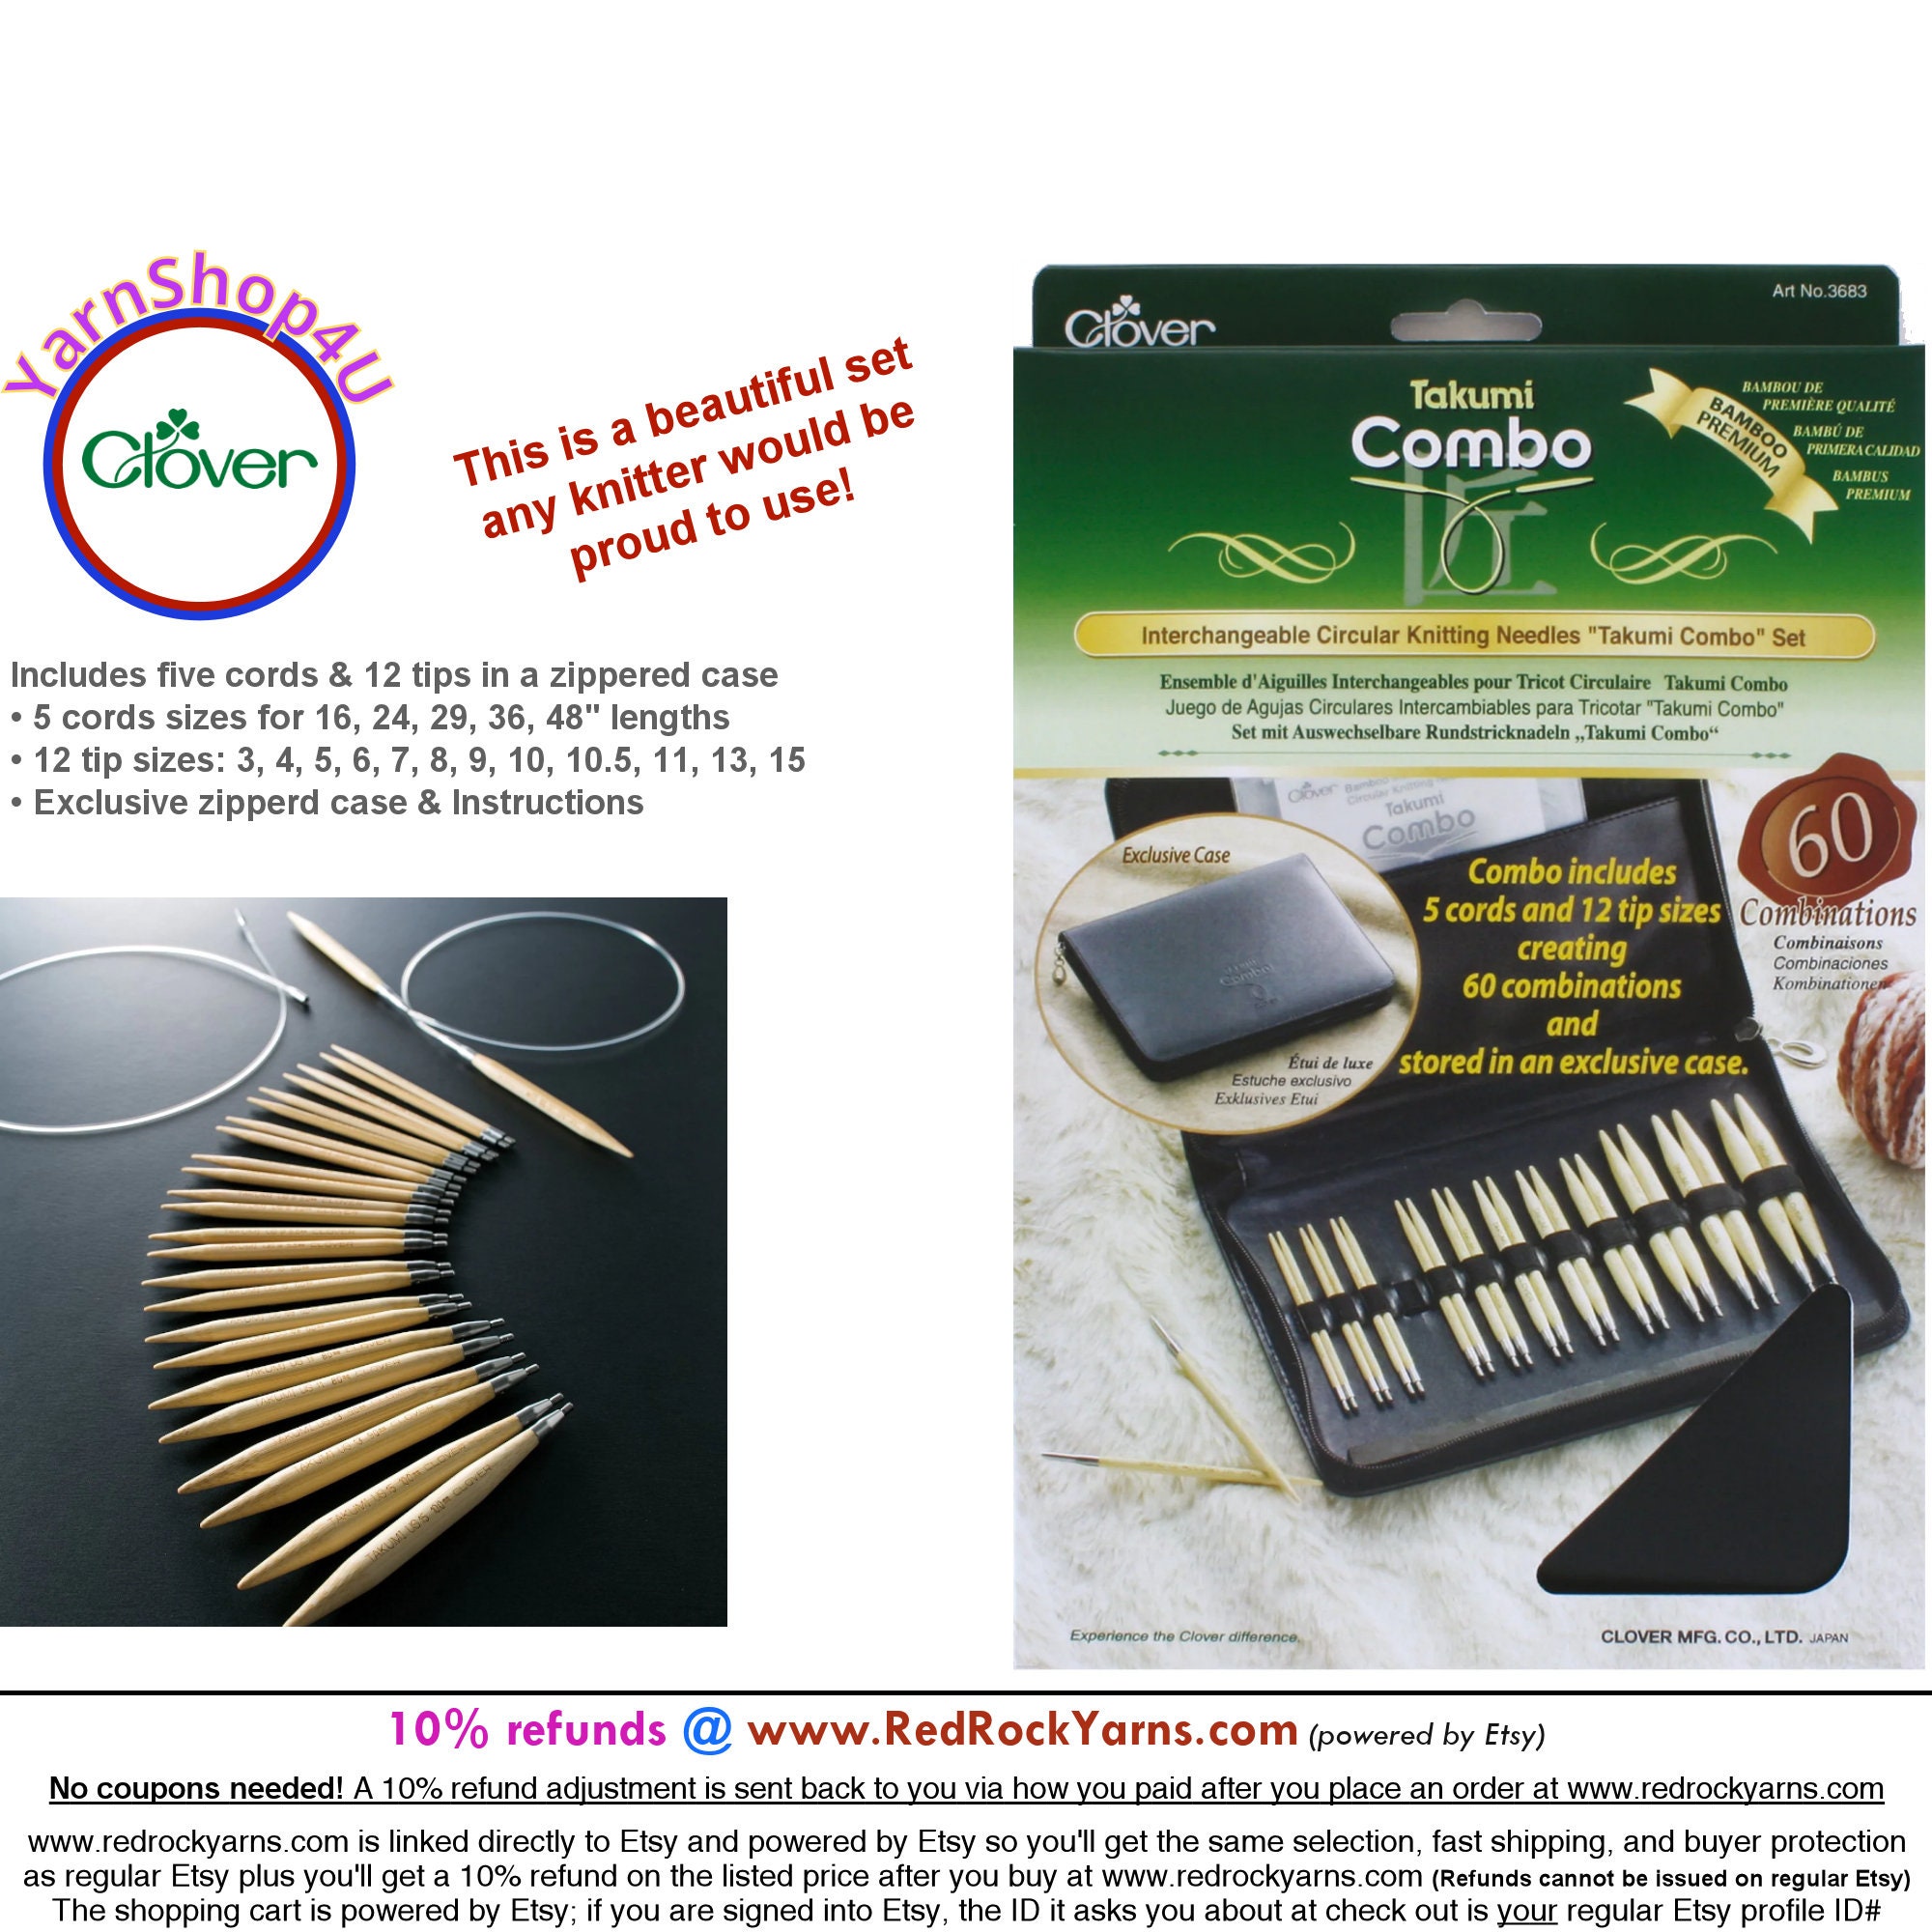 Clover Bamboo Circular Knitting Needle Intchg Set 